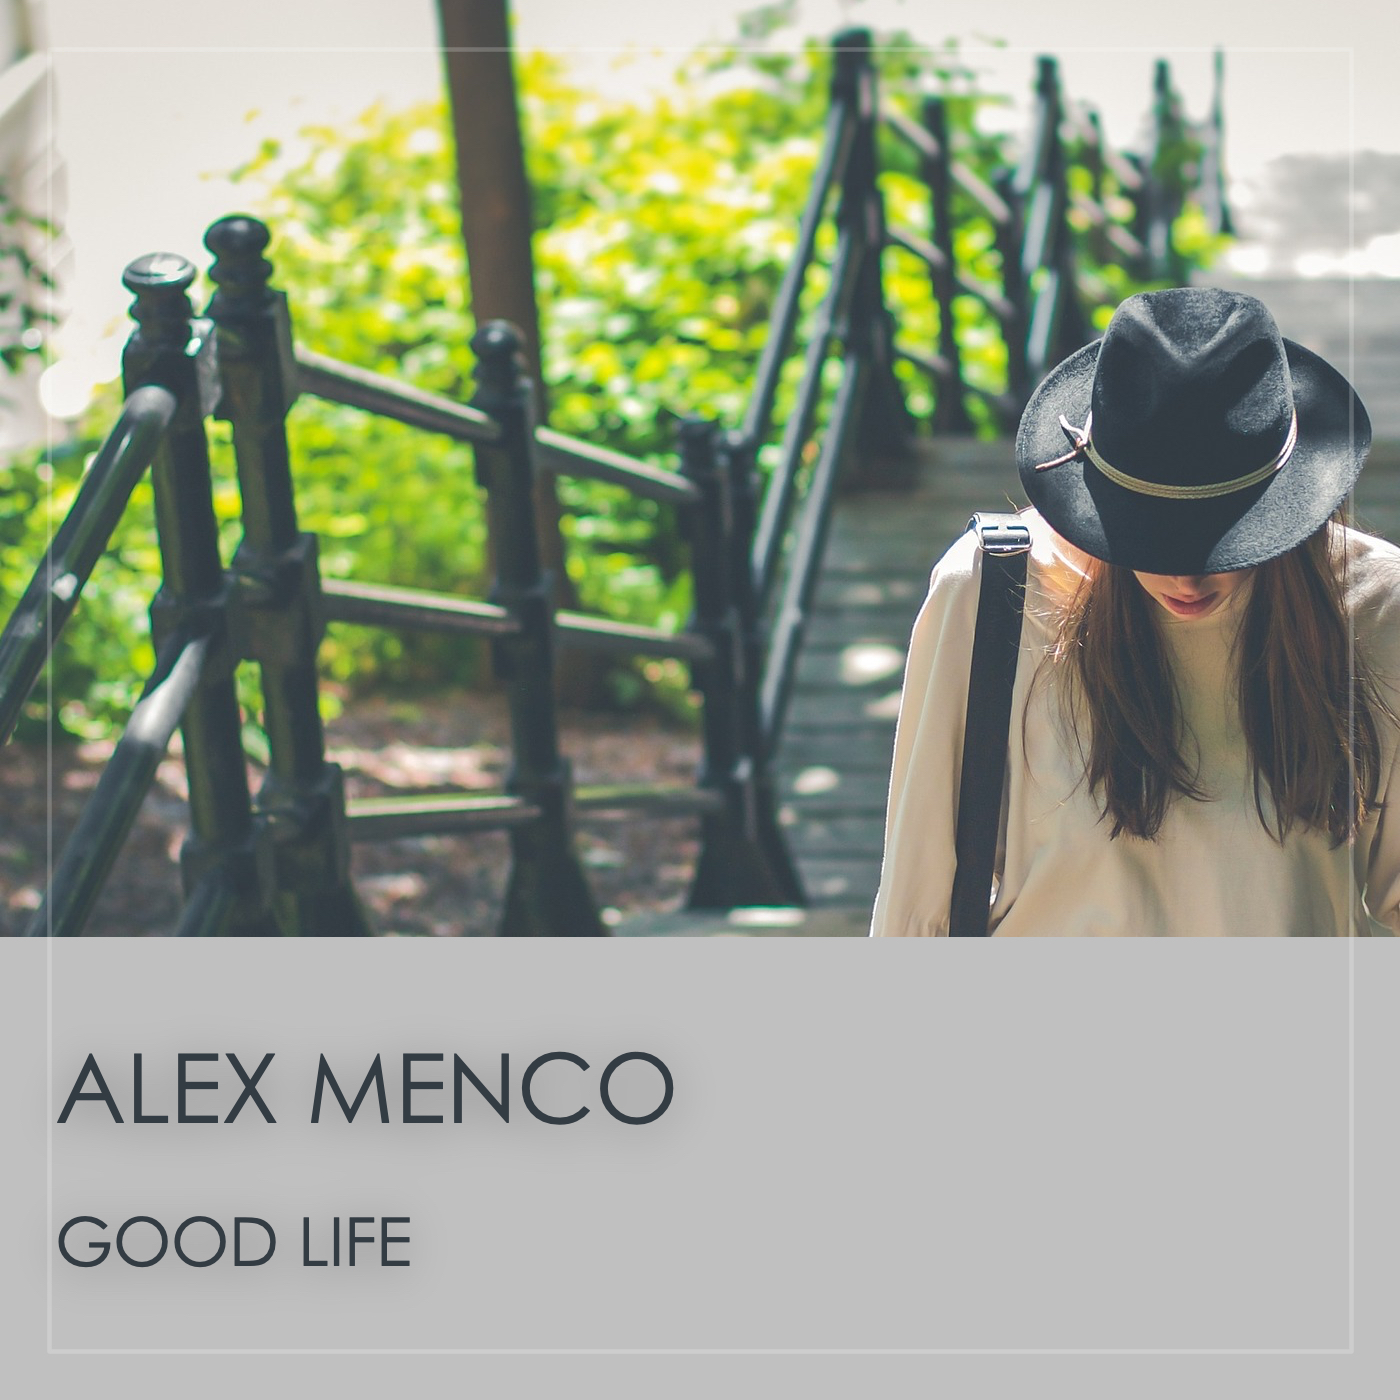 Bass x extended mix alex menco. Bigger than Life Alex Menco. Good Life песня. Alex Menco - with you. Alex Menco - bigger than Life (Extended Mix).